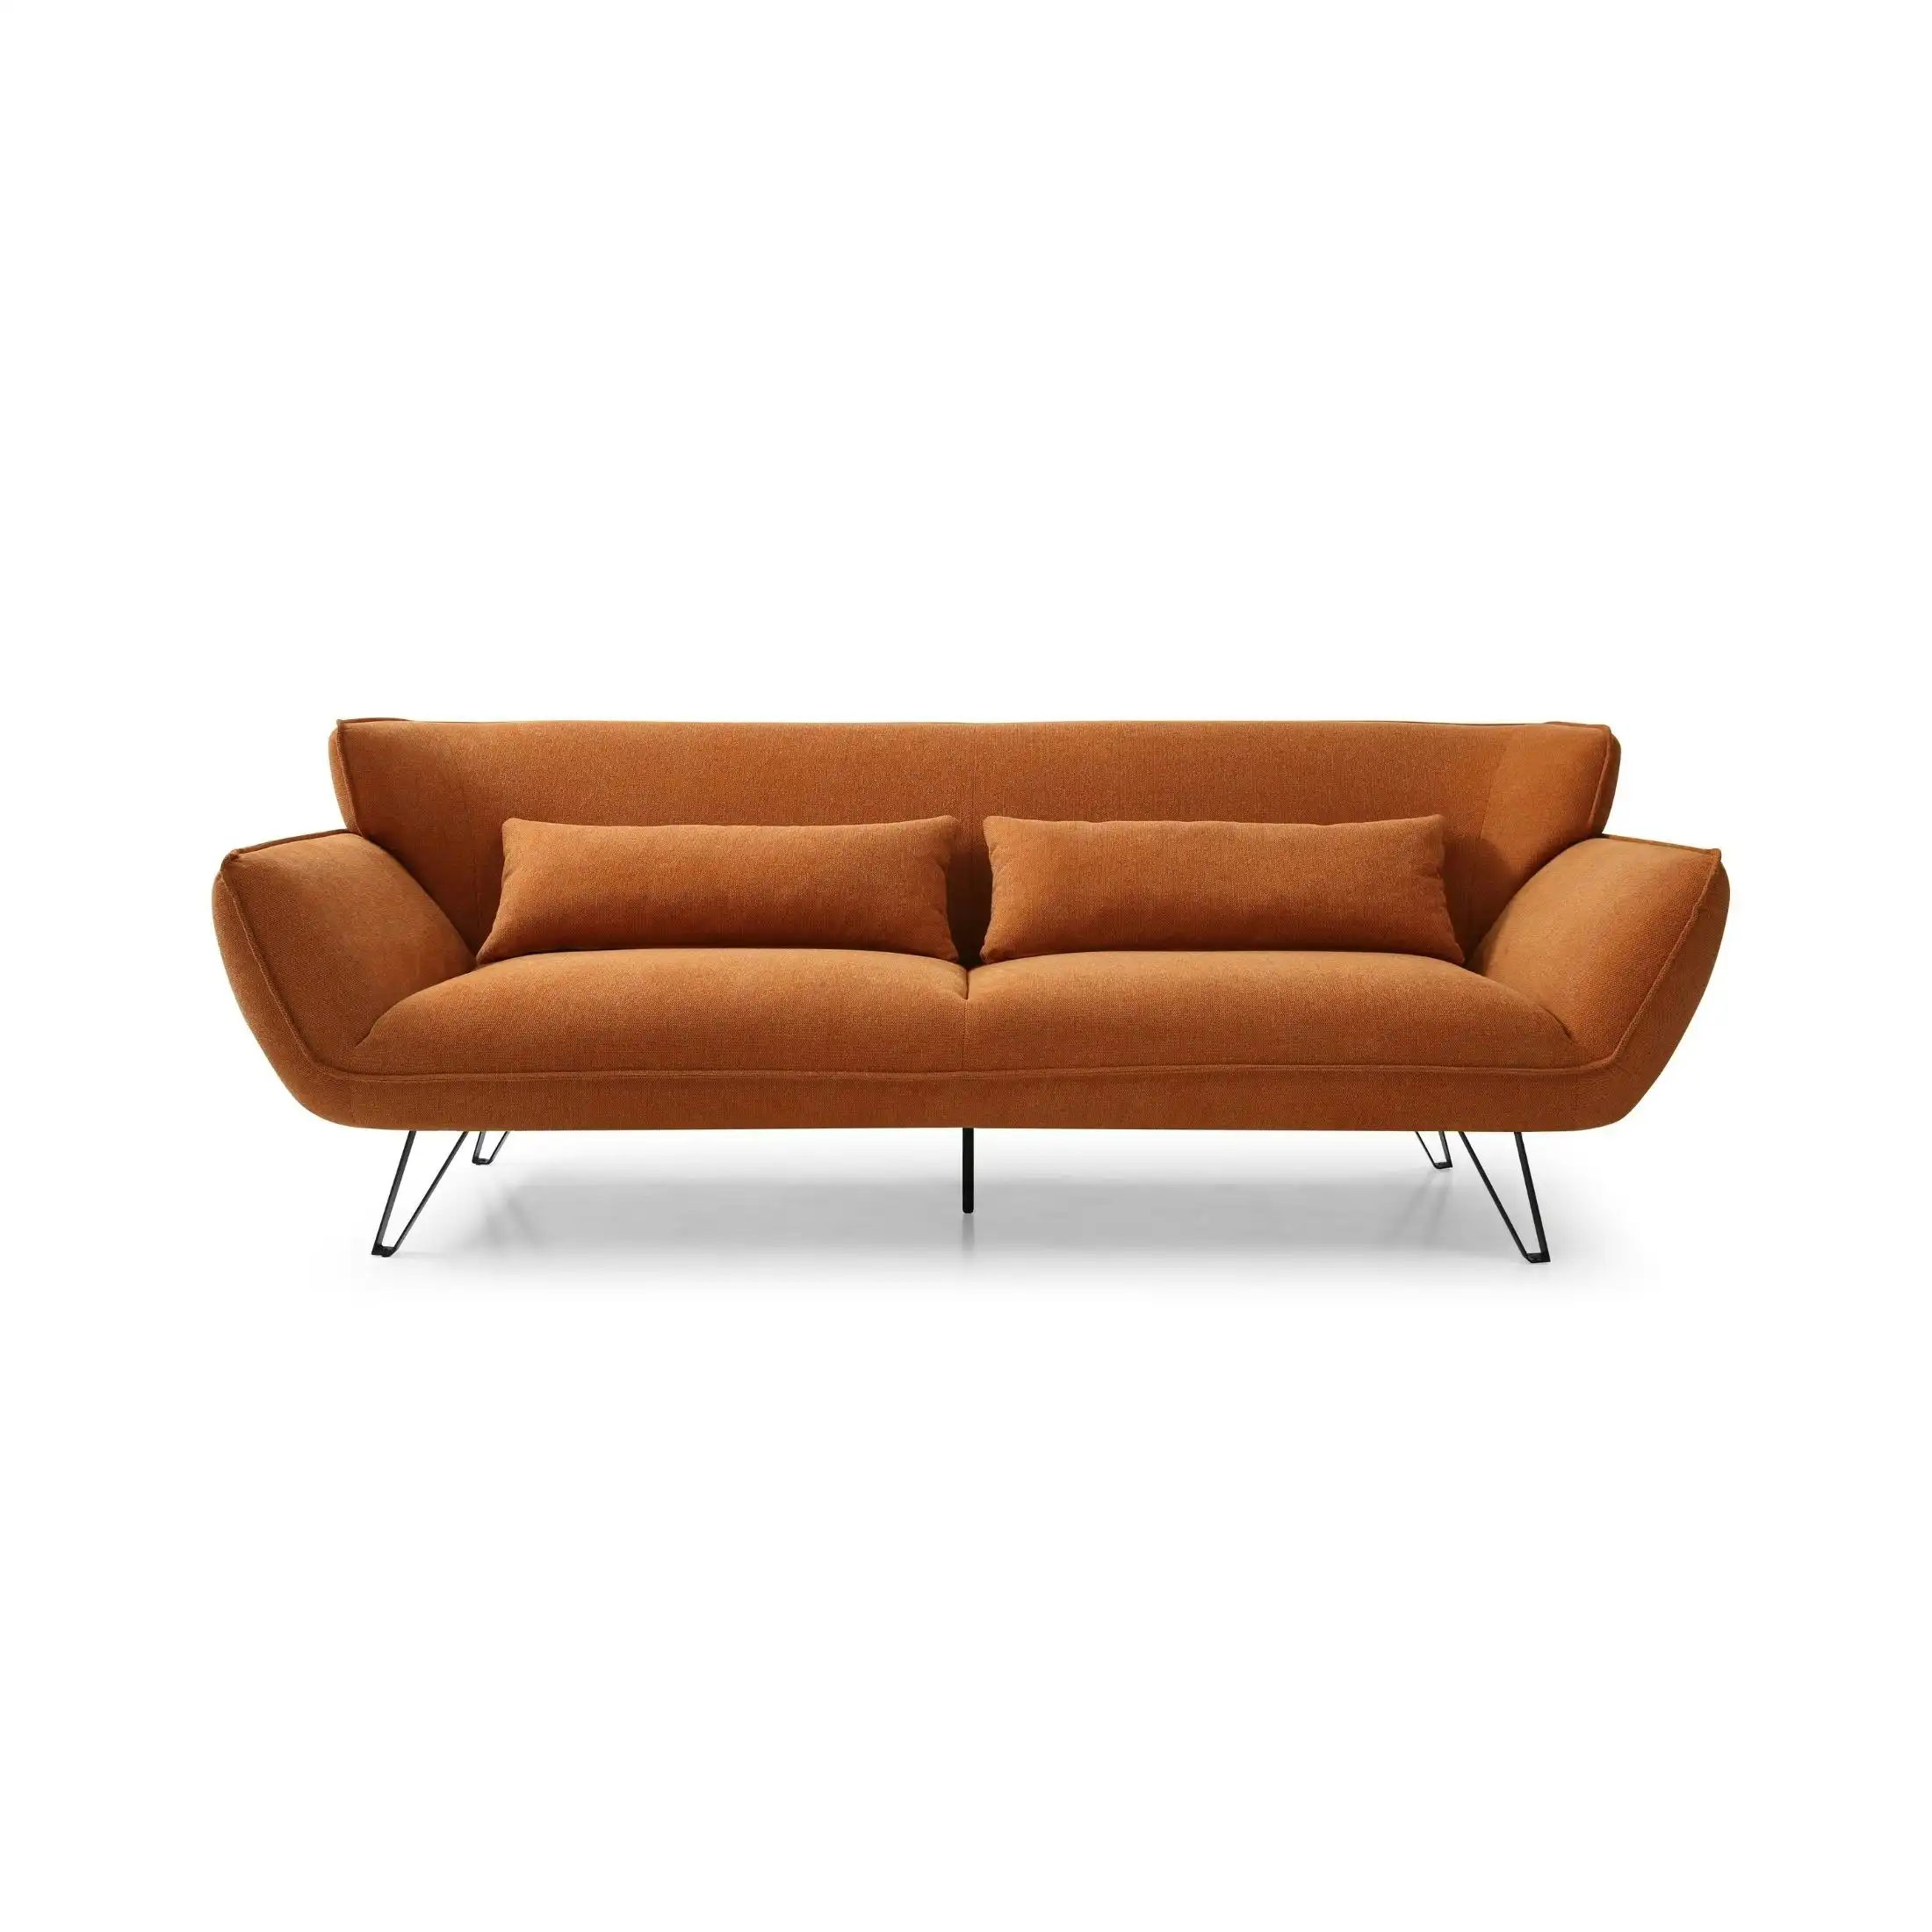 Amber 3 Seater Sofa - Orange Colour